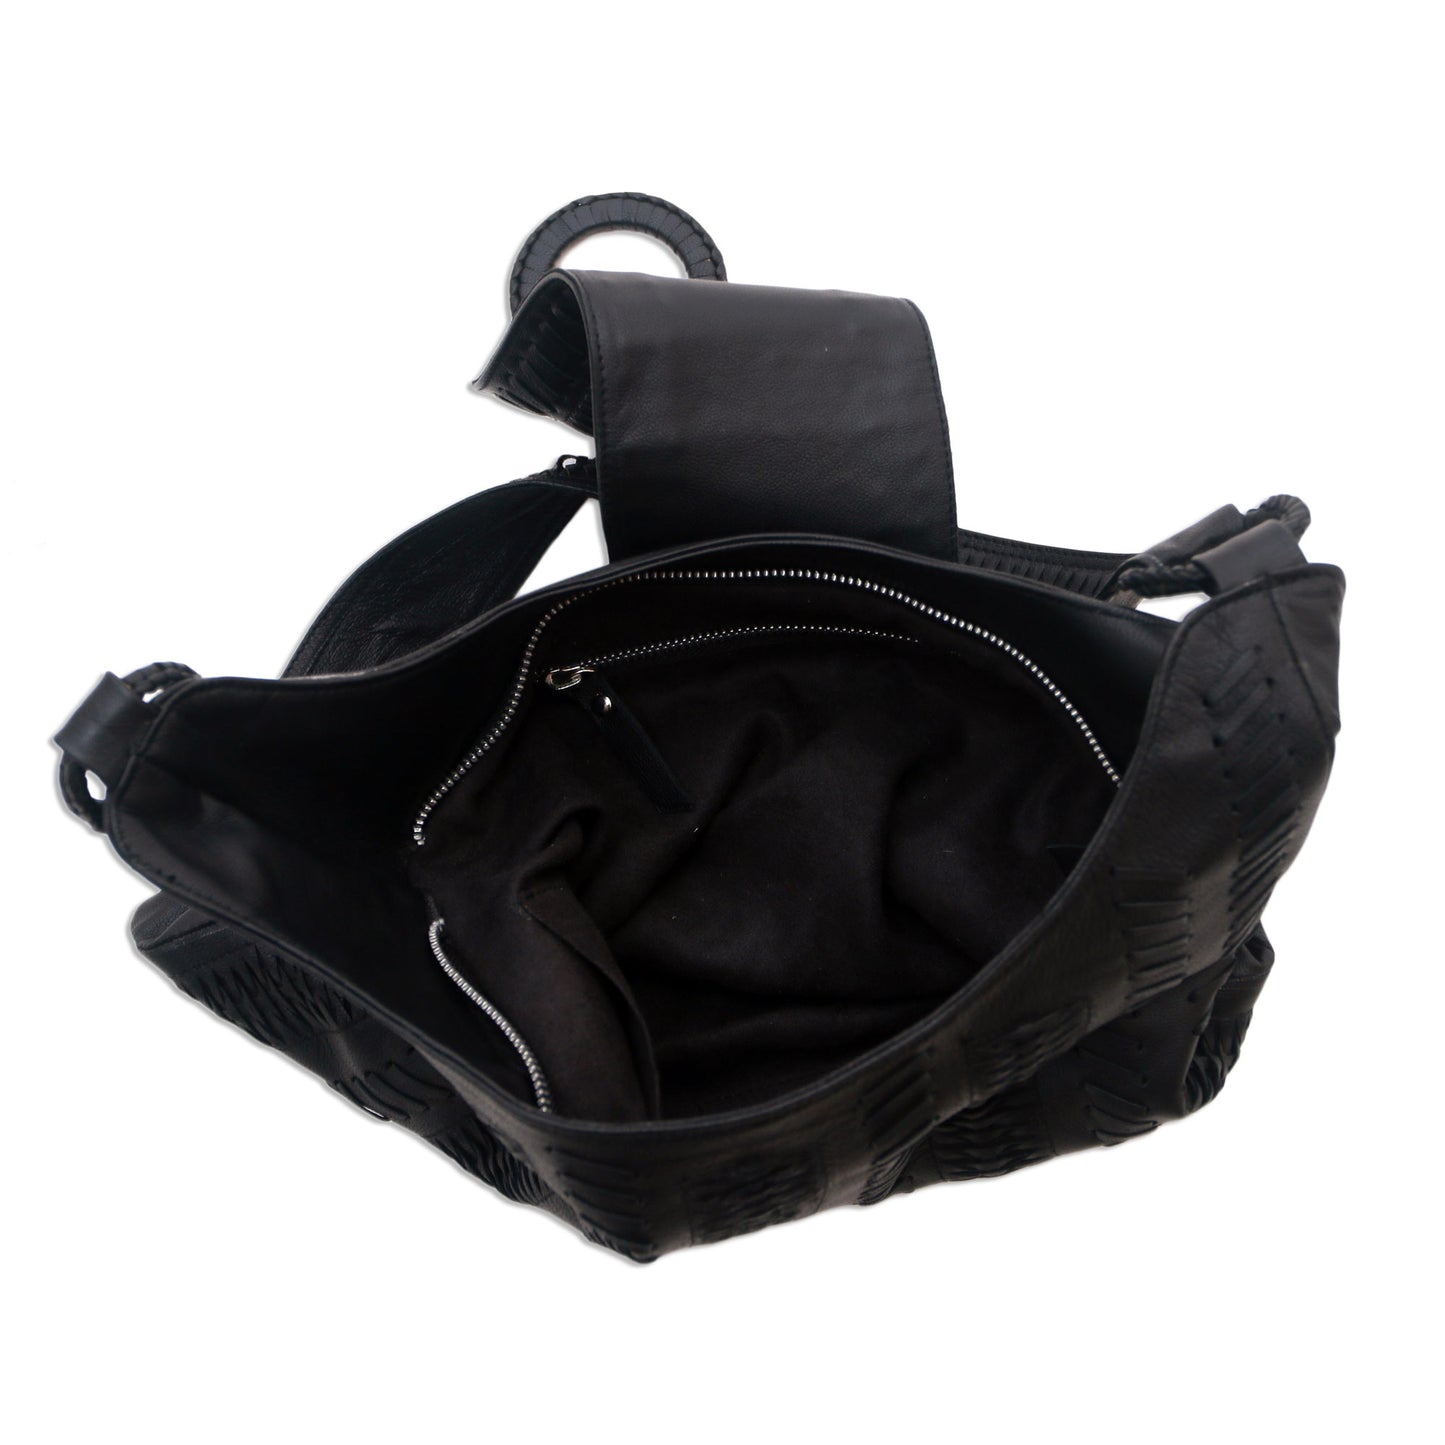 Onyx Anyaman Patterned Leather Hobo Handbag in Onyx from Bali